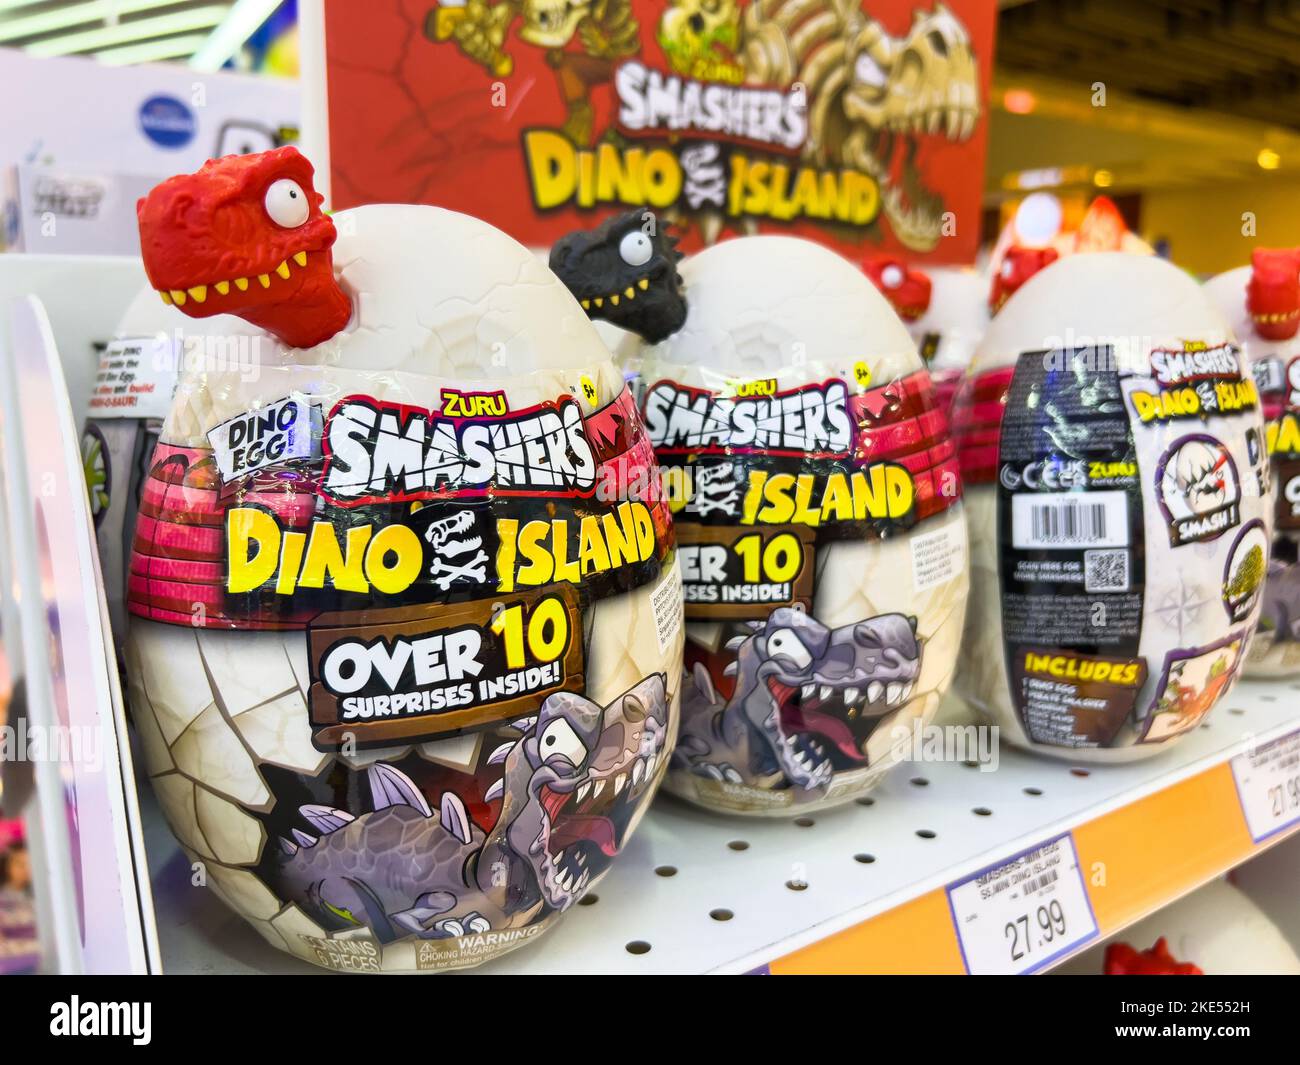 Zuru Smashers egg toys on shelf for sales Stock Photo